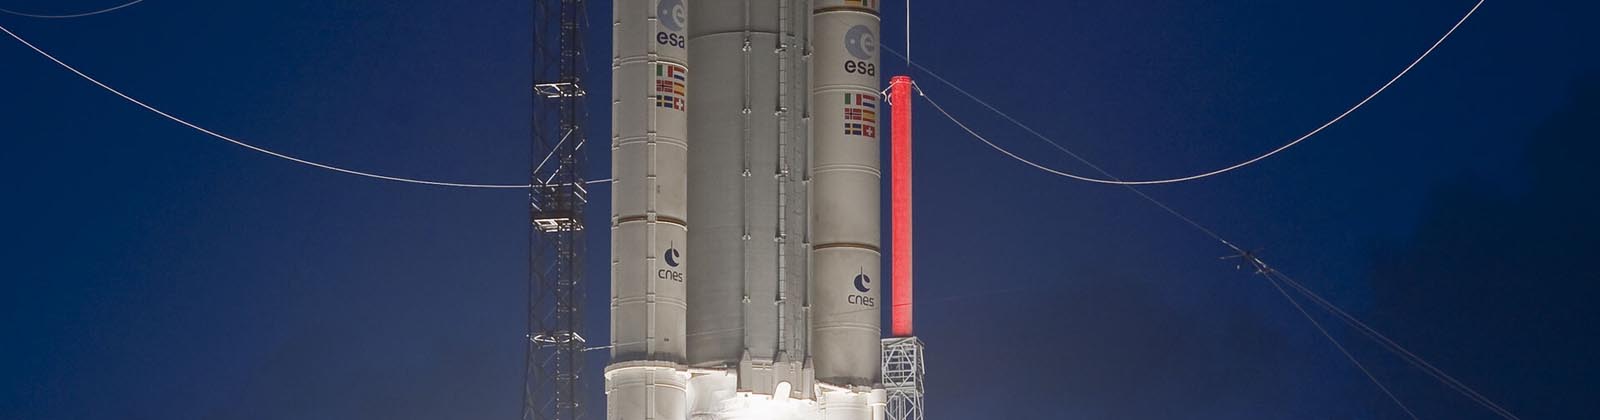 Lancement Ariane V199 - Hispasat 1E - Koreasat 6